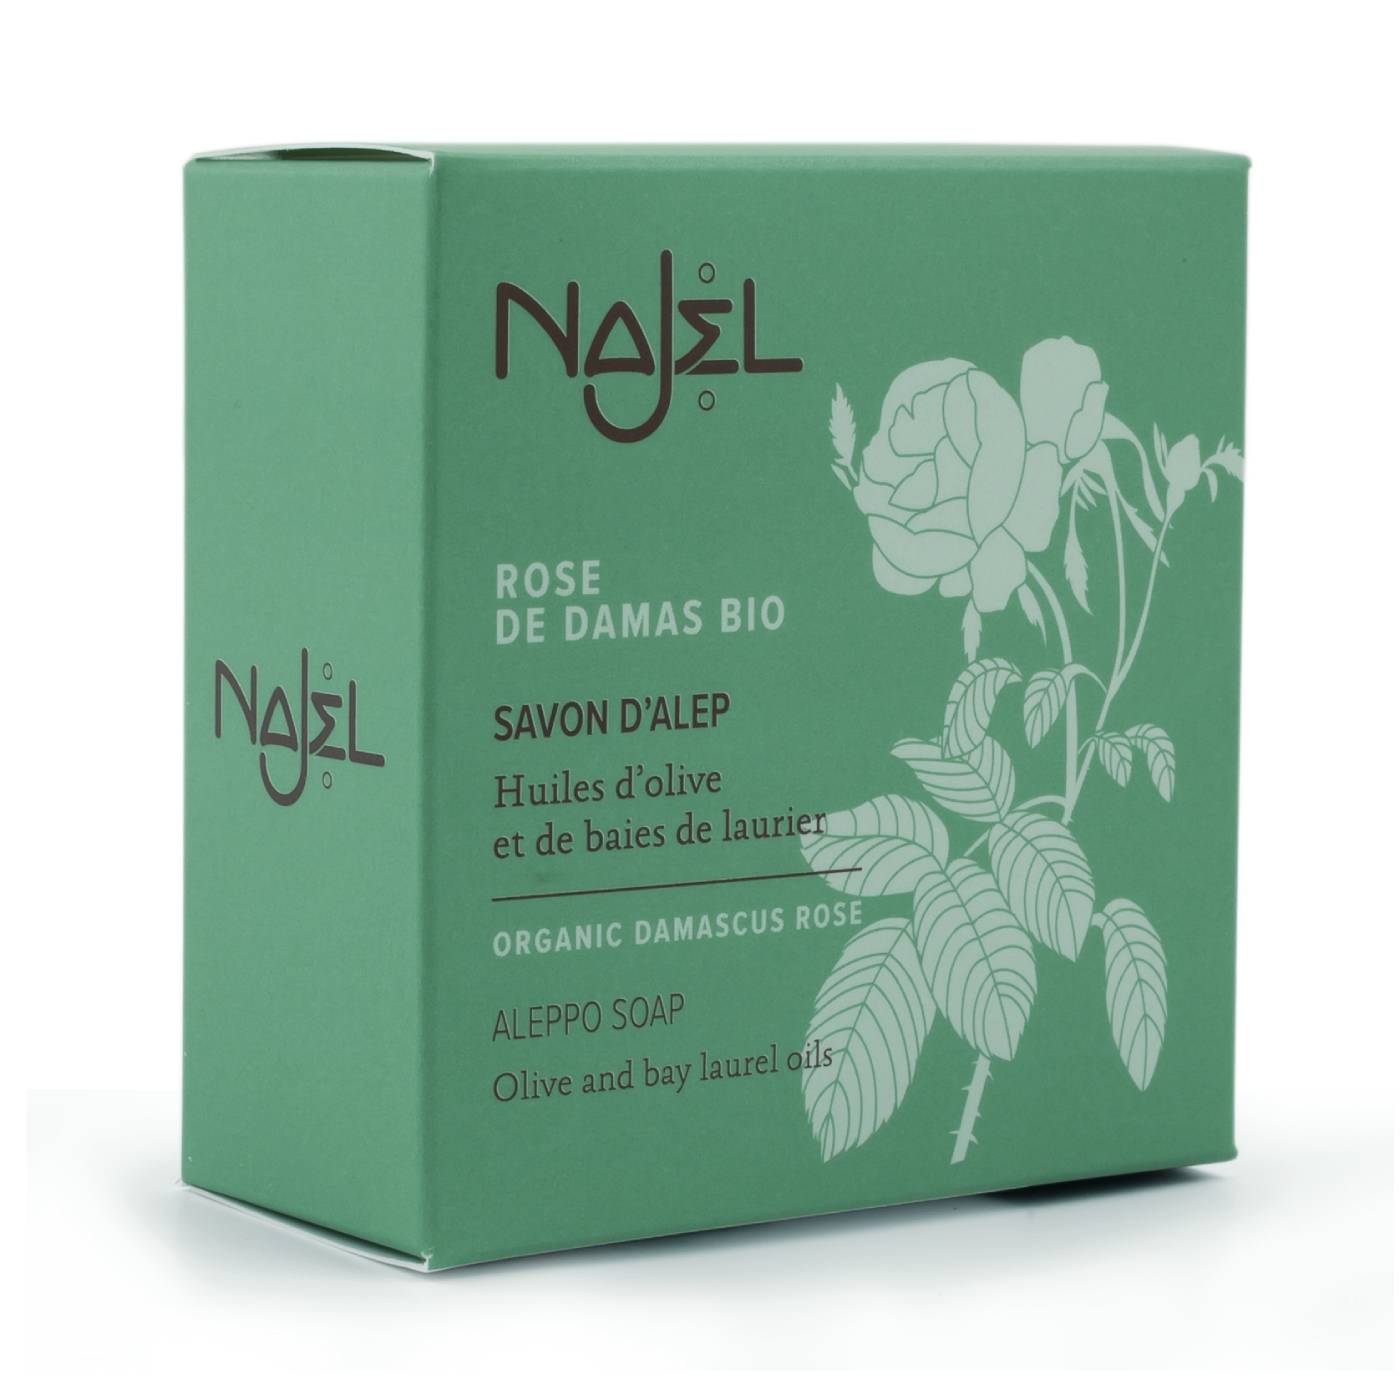 NAJEL Organic Skincare - Aleppo Soap Organic Damascus Rose, 100g, Organic, Vegan